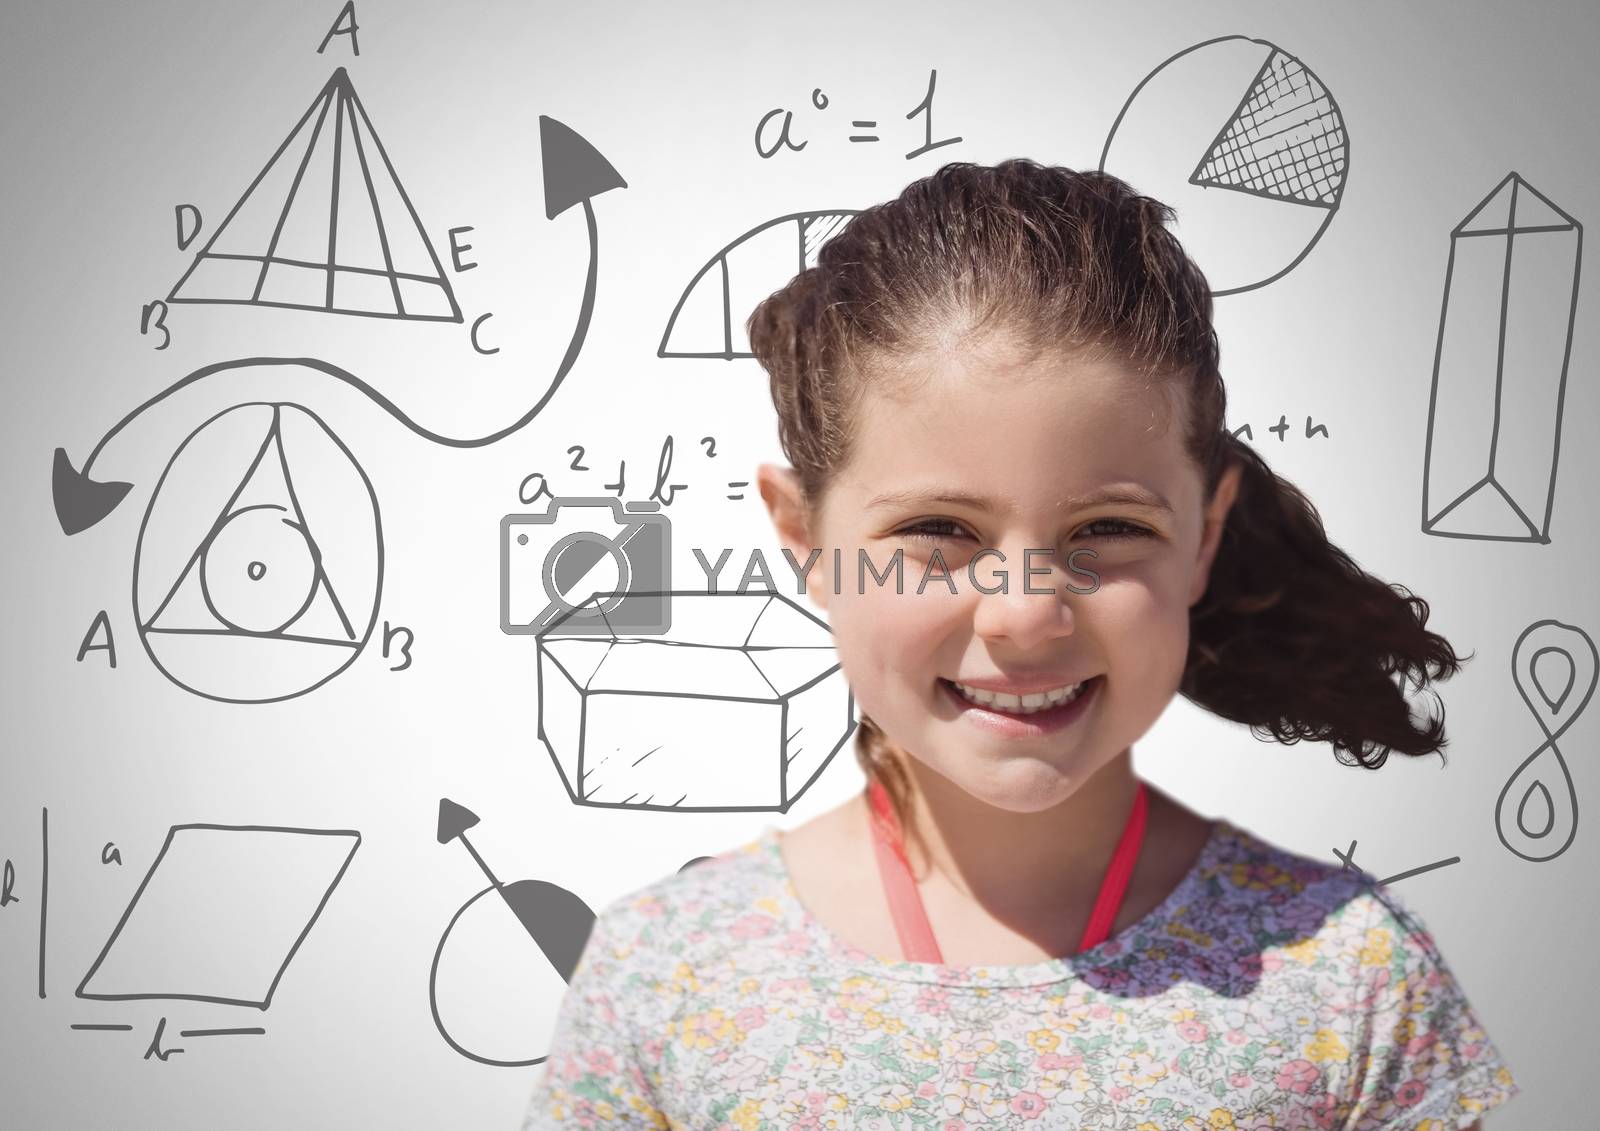 Royalty free image of Schoolgirl with math drawings by Wavebreakmedia